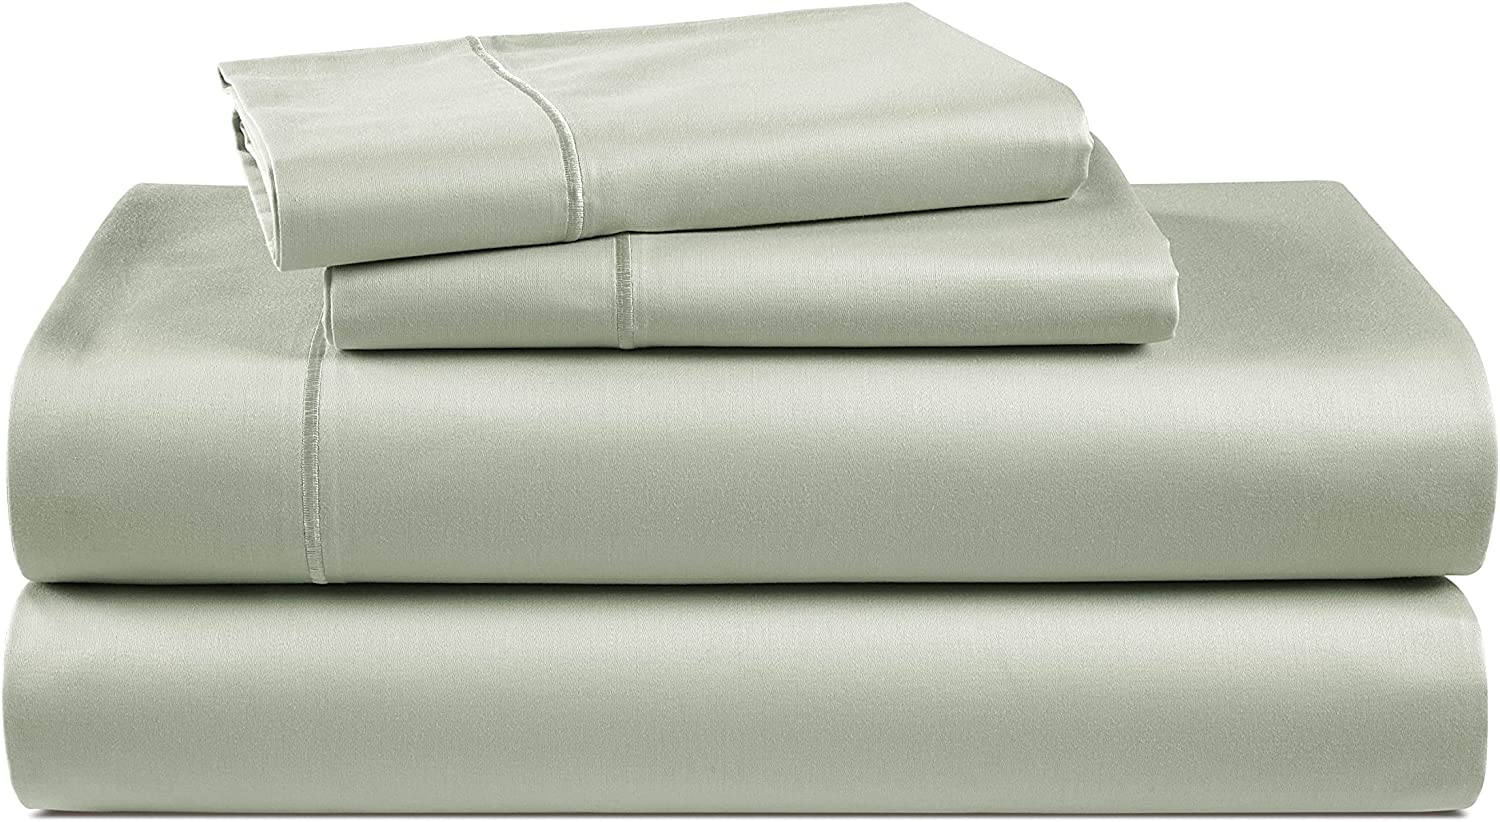 LANE LINEN Luxury 100% Egyptian Cotton Bed Sheets - 1000 Thread